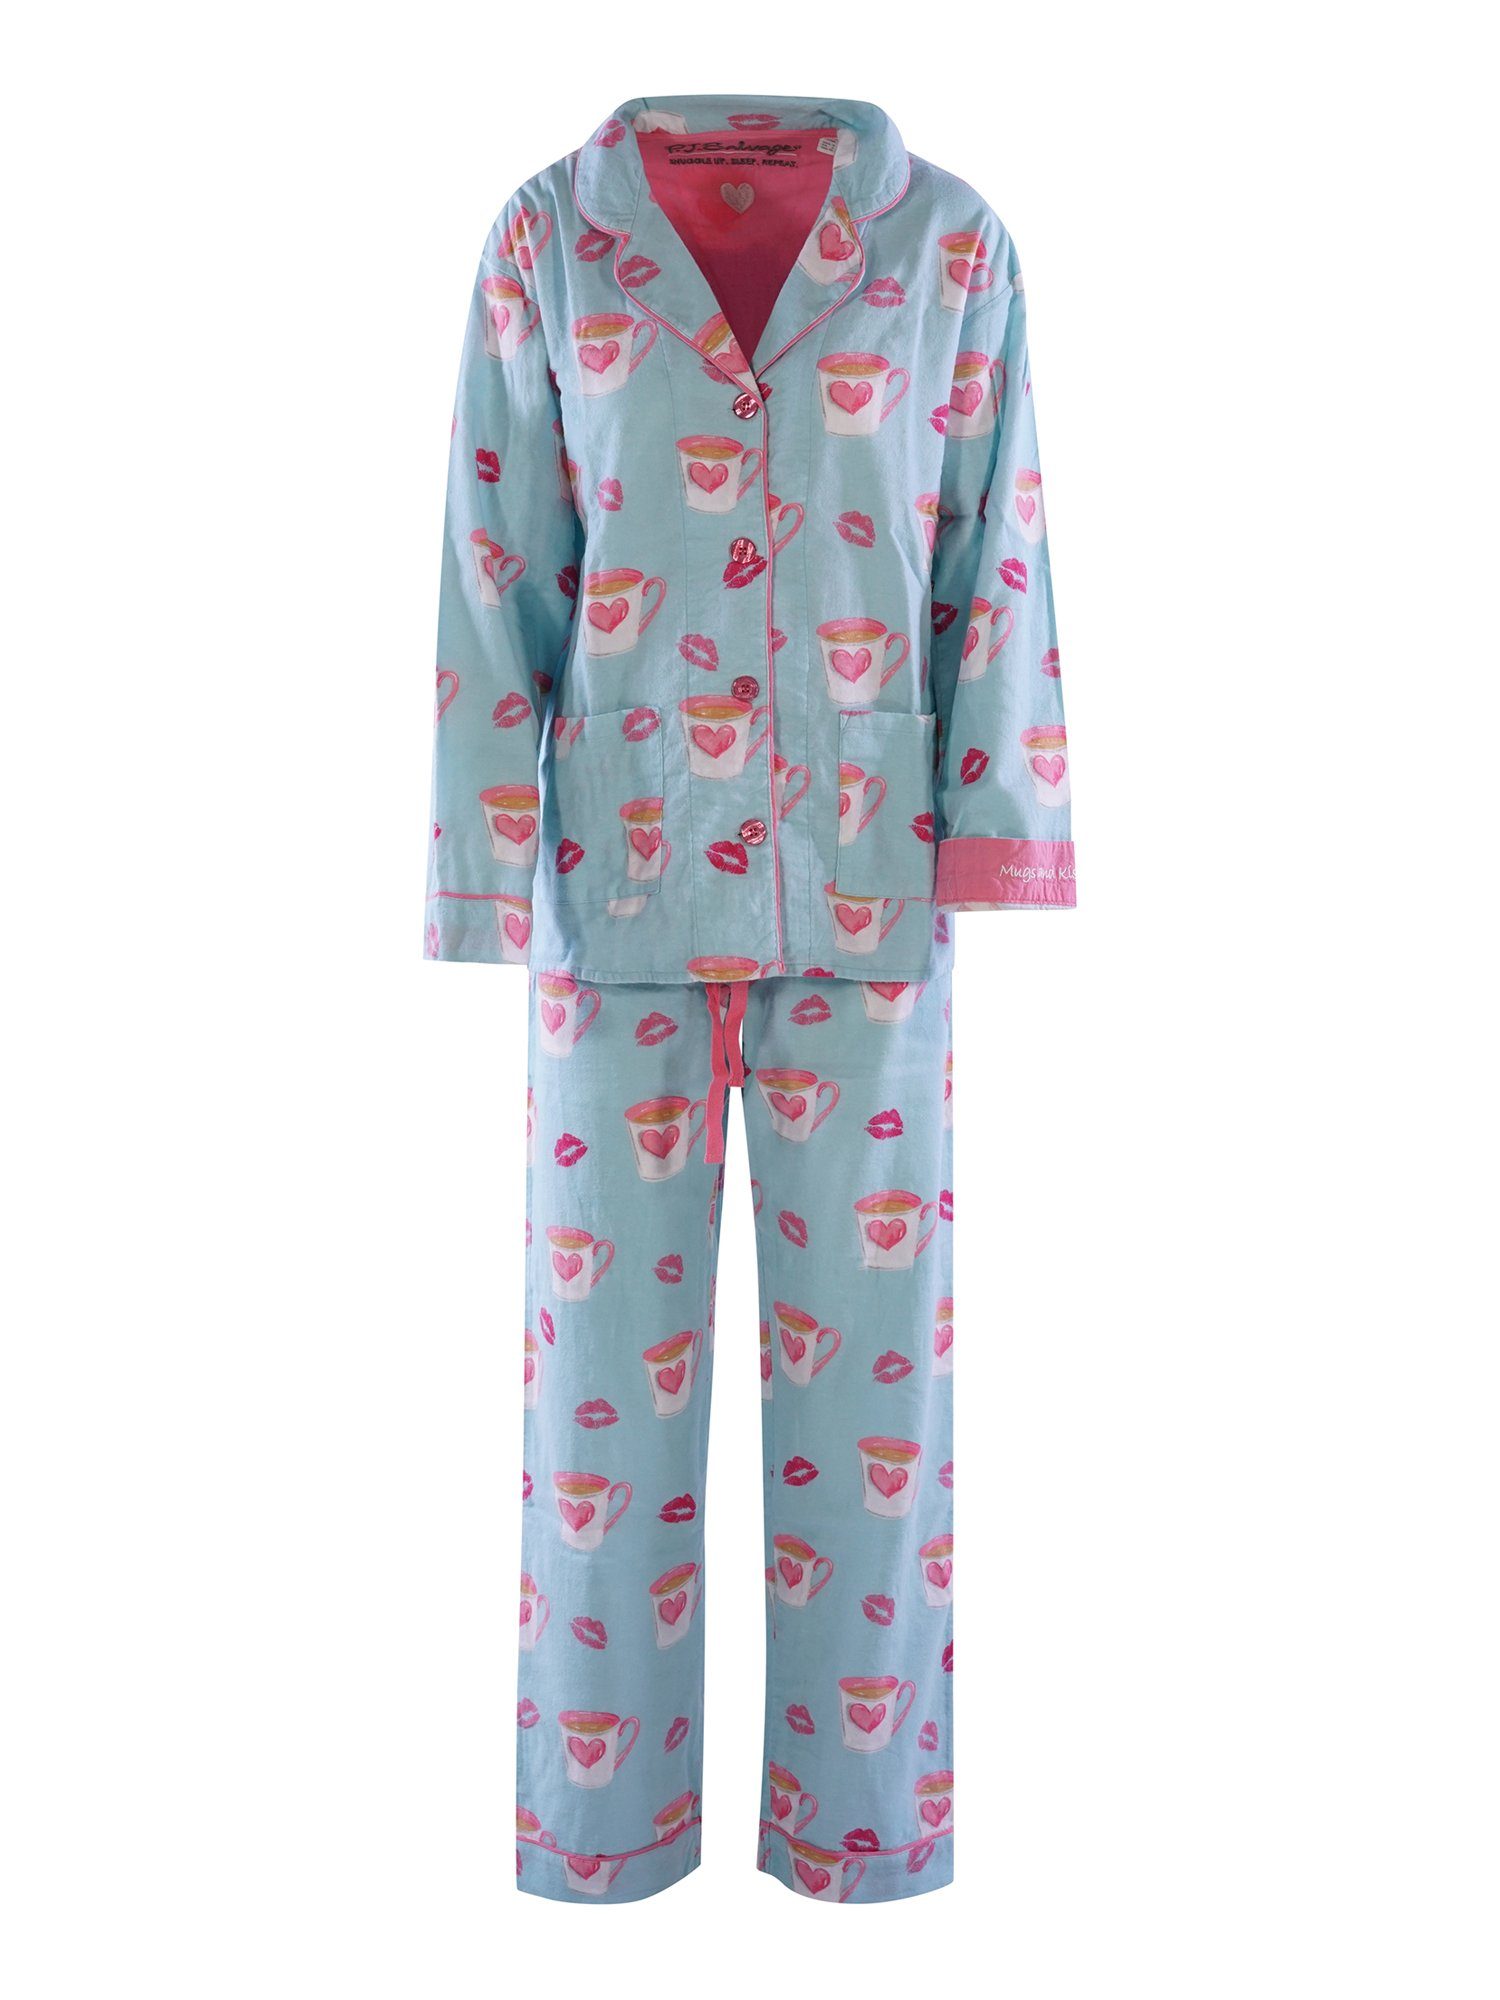 PJ Salvage Pyjama Flanells schlafanzug pyjama schlafmode aqua